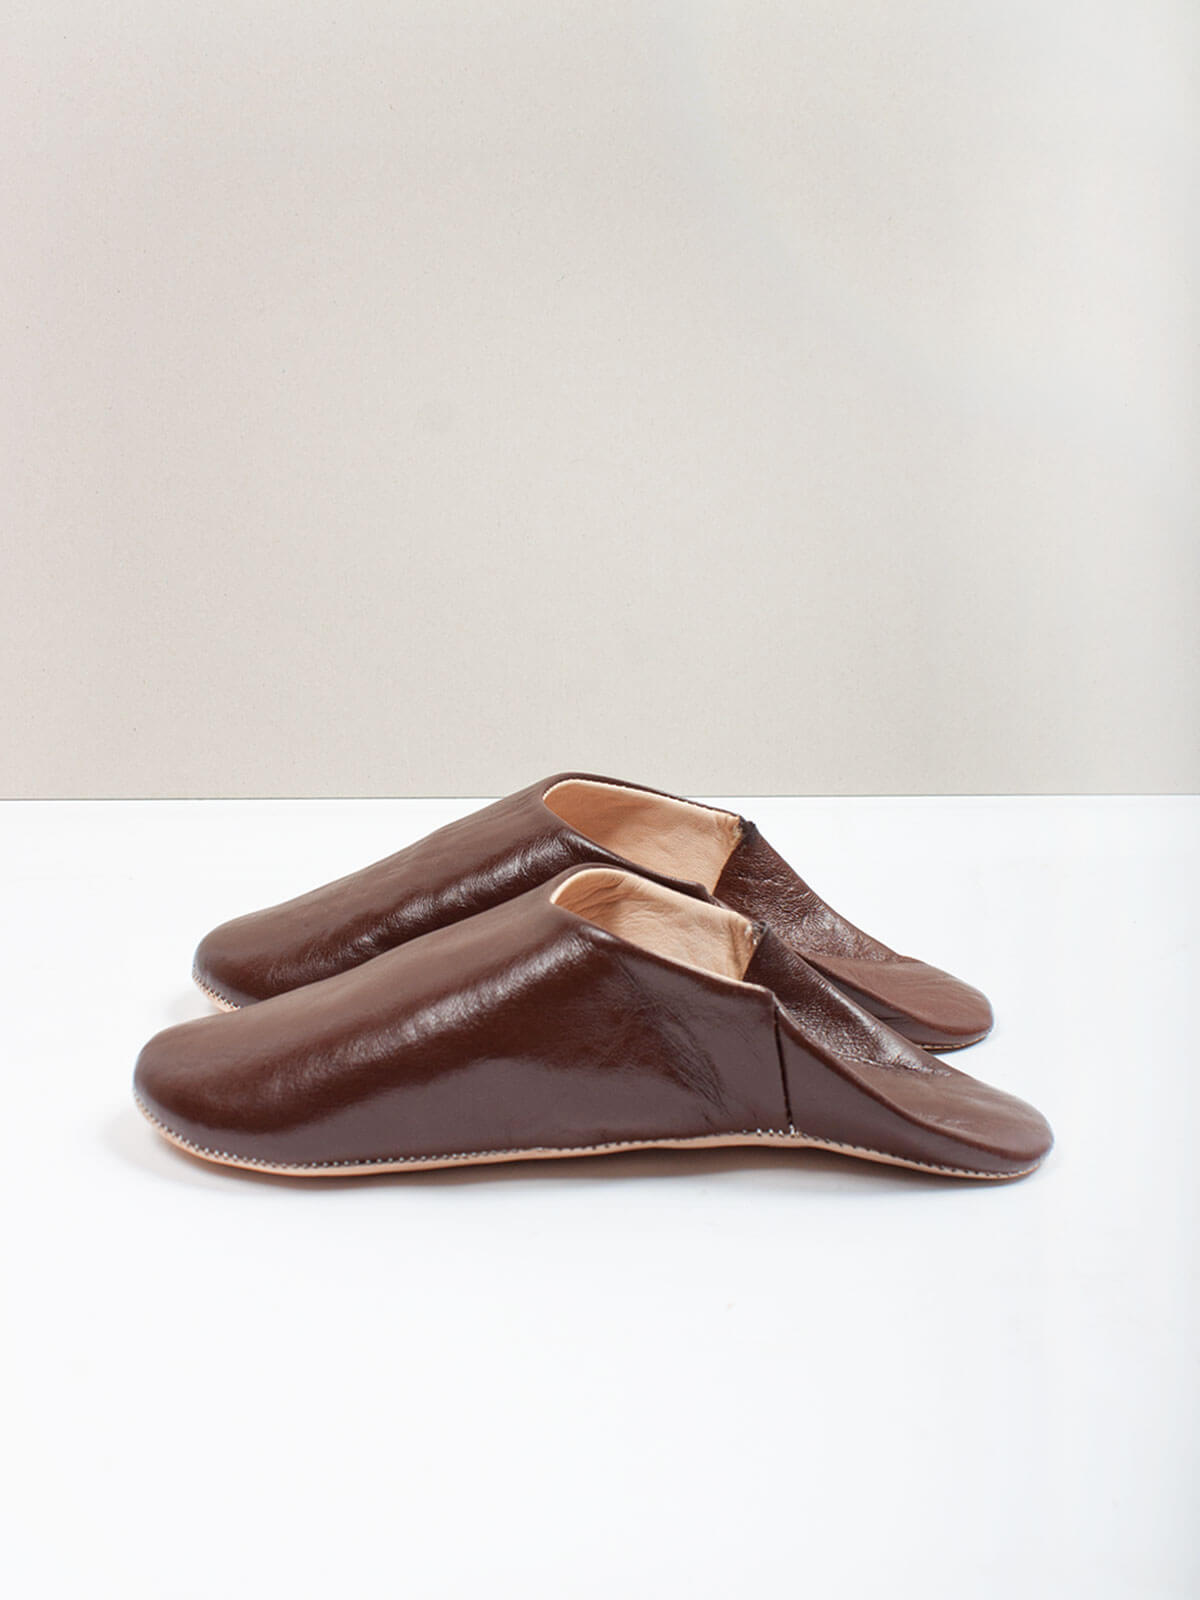 Moroccan Babouche Slippers, Chocolate | Bohemia Design